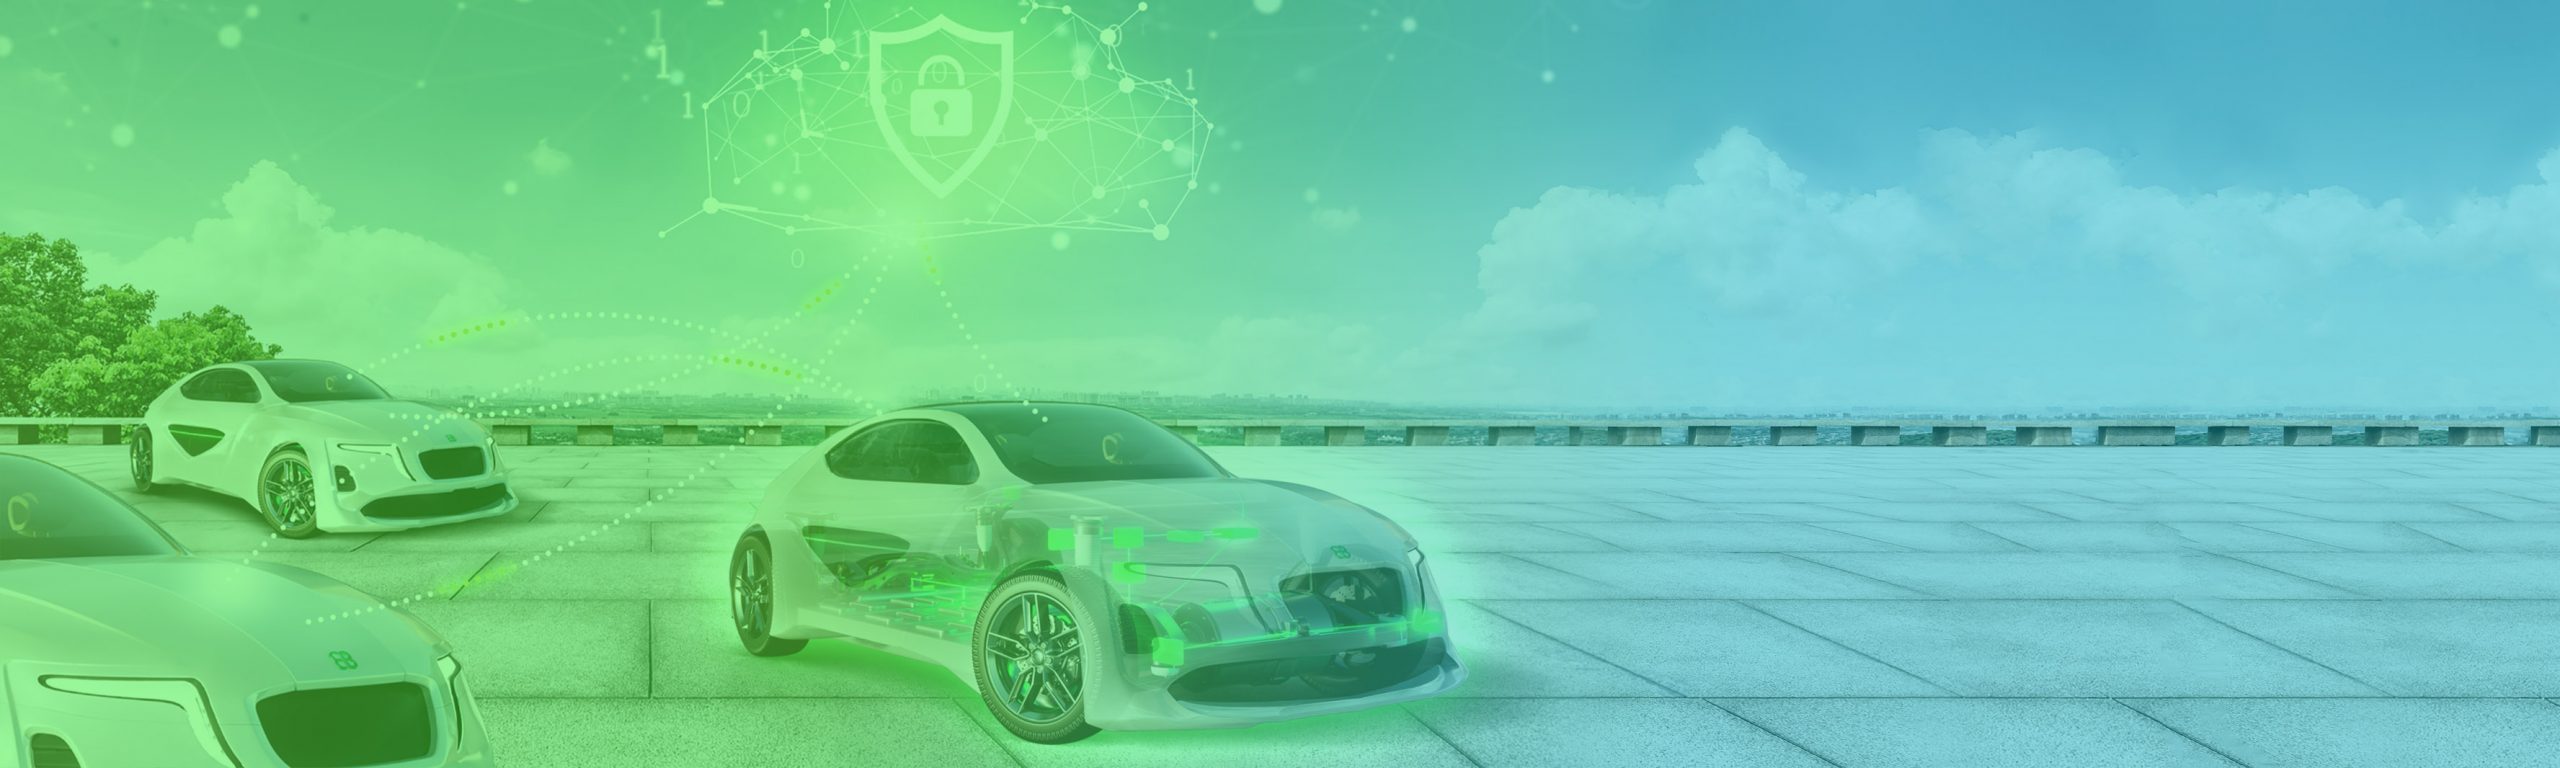 Automotive Cyber Security